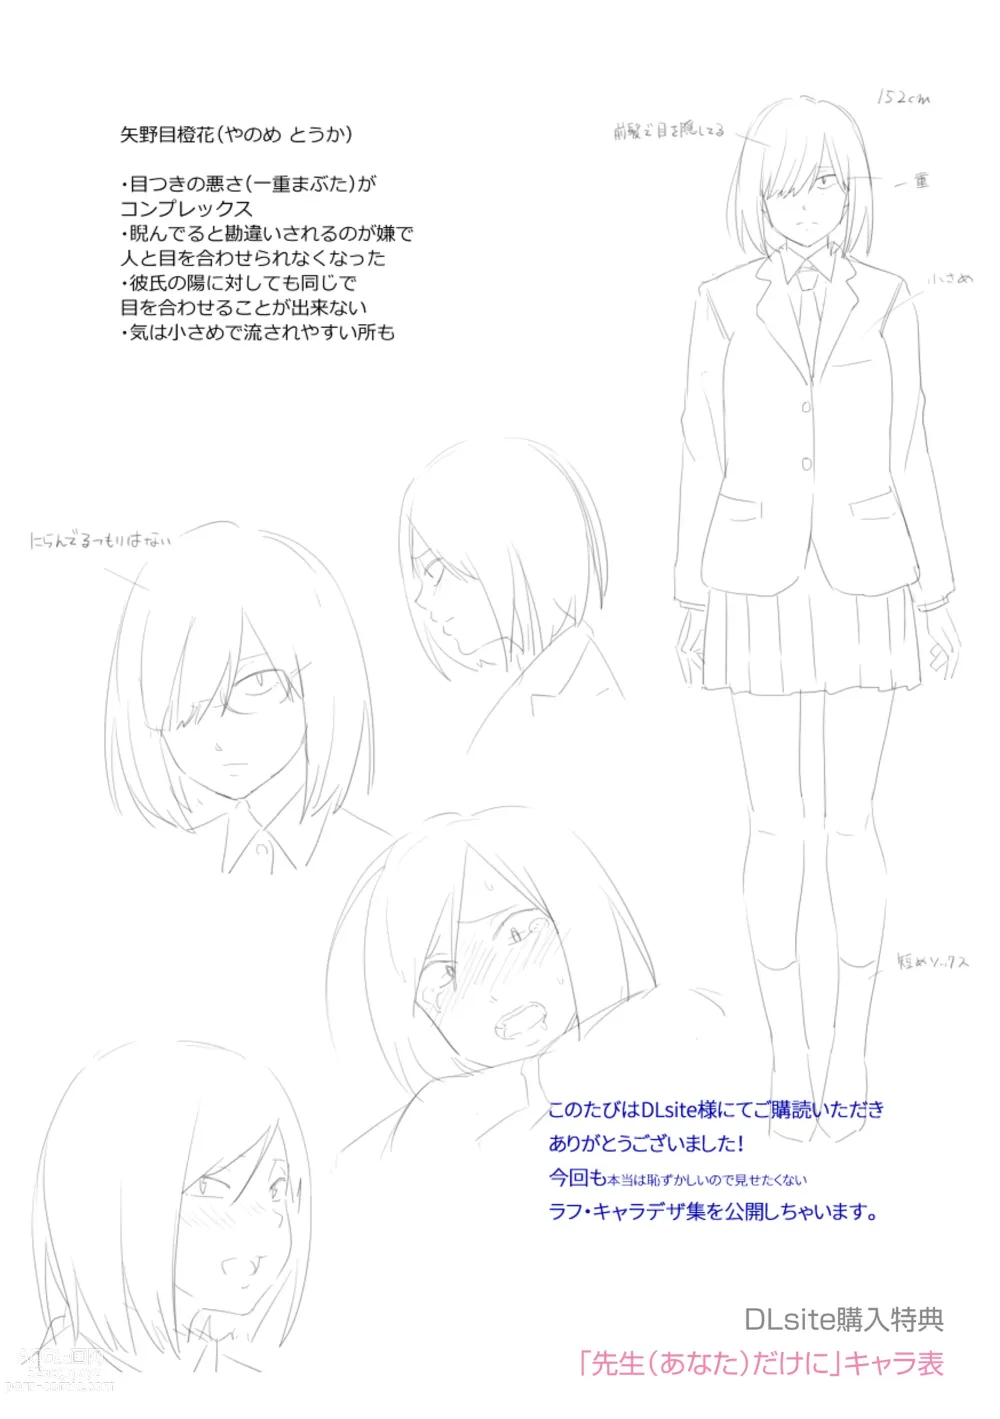 Page 184 of manga Shishunki no Eros - puberty eros + DLsite Kounyu Tokuten